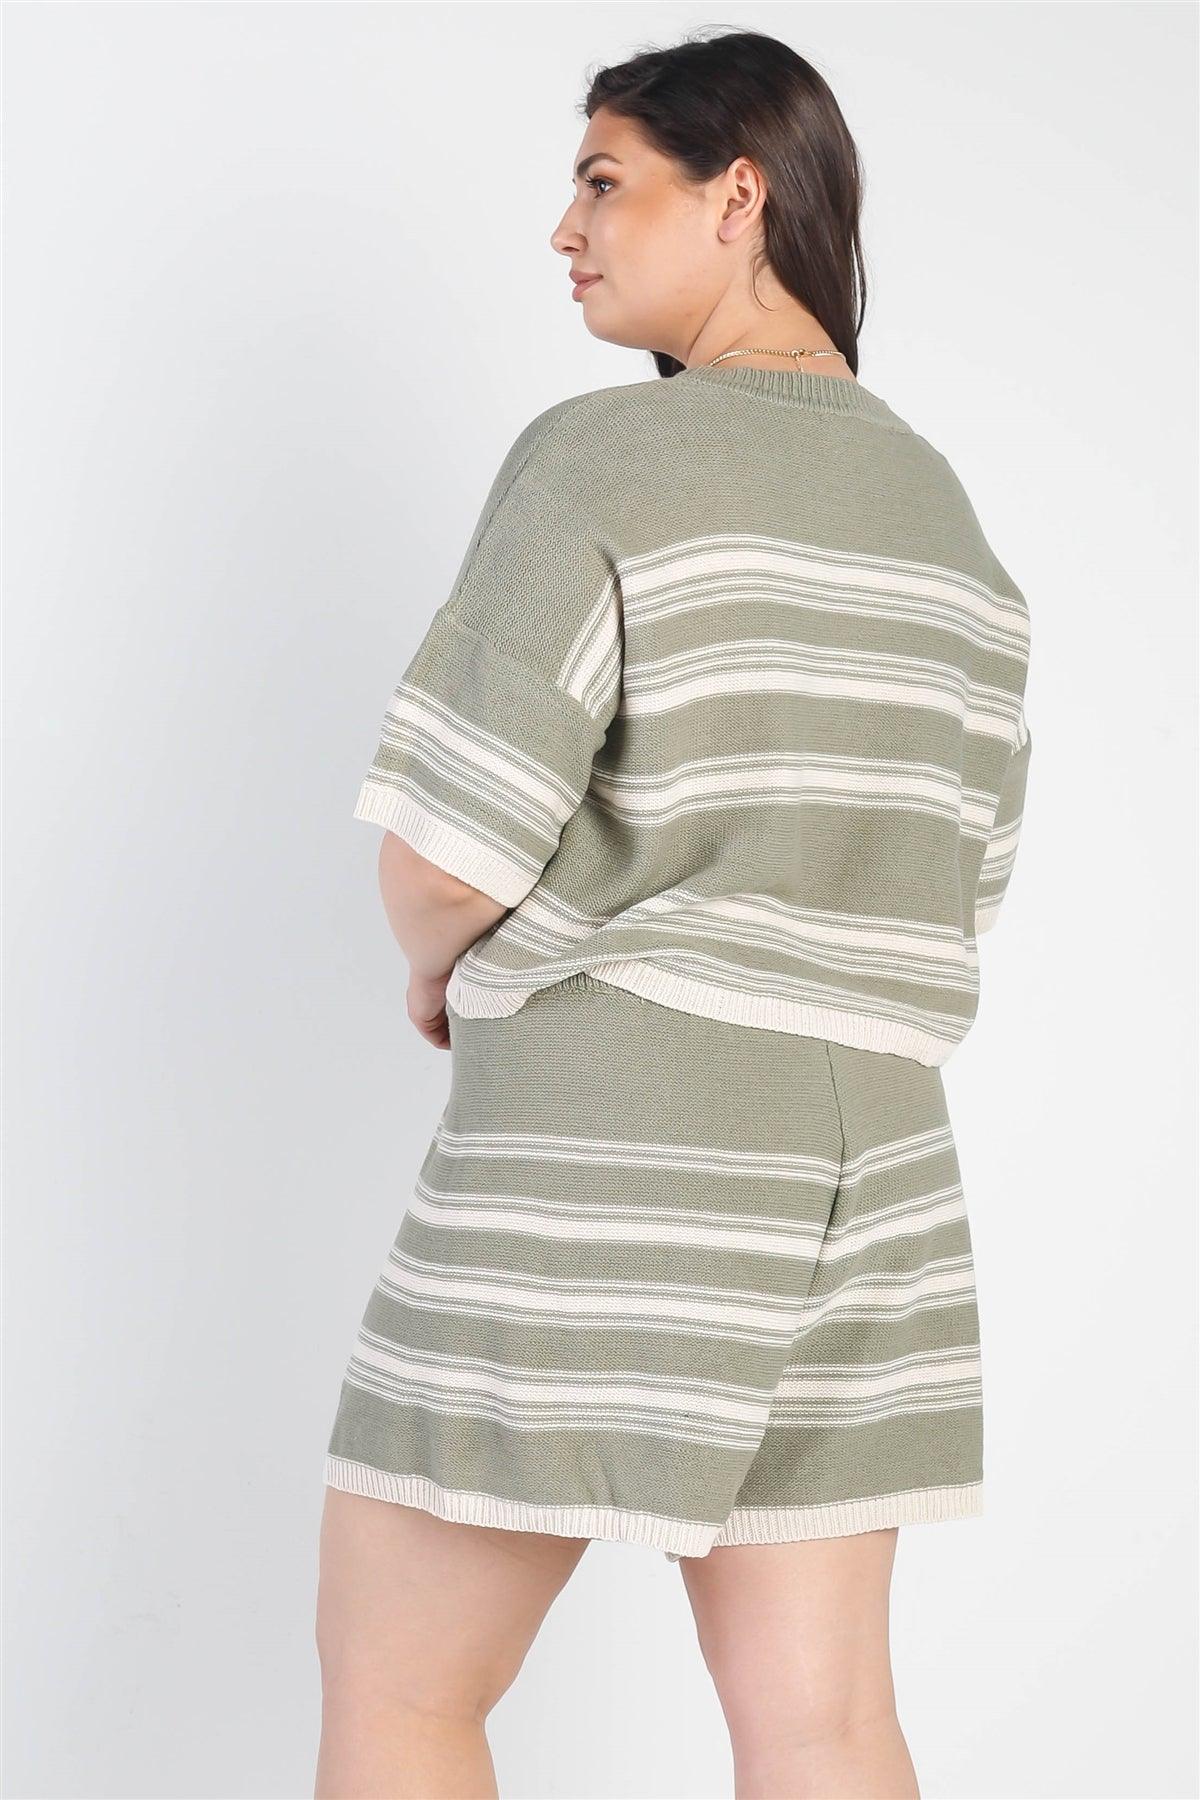 Junior Plus Olive Striped Knit Short Sleeve Crop Top High Waist Shorts Set /3-2-1